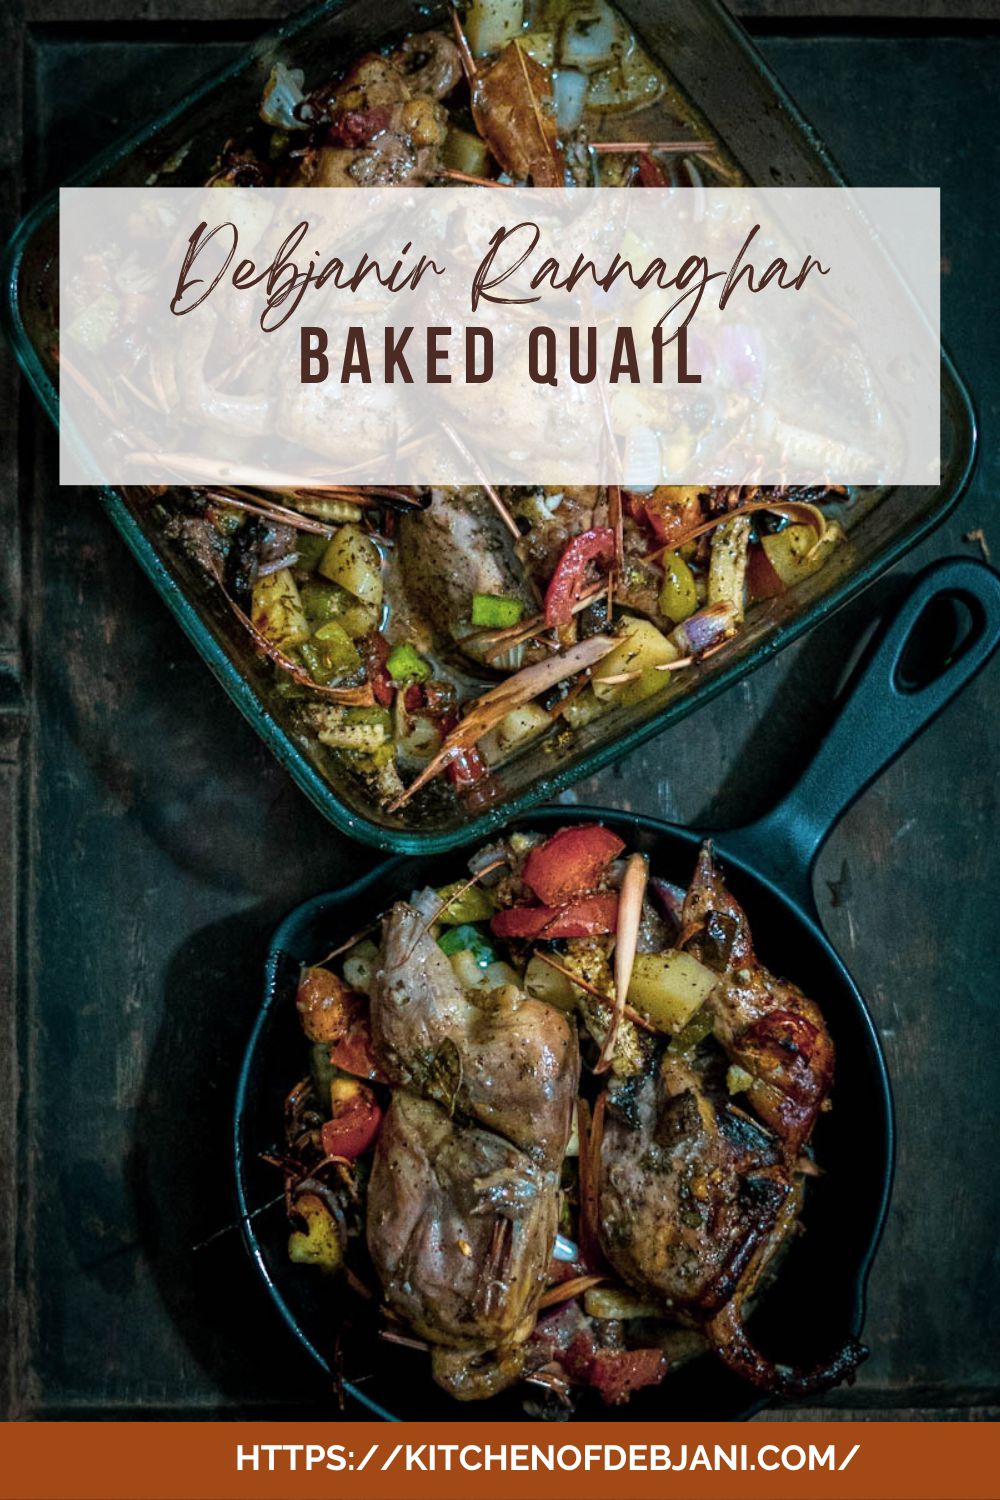 %baked Quail recipe debjanir rannaghar Photo Food Pinterest Pin